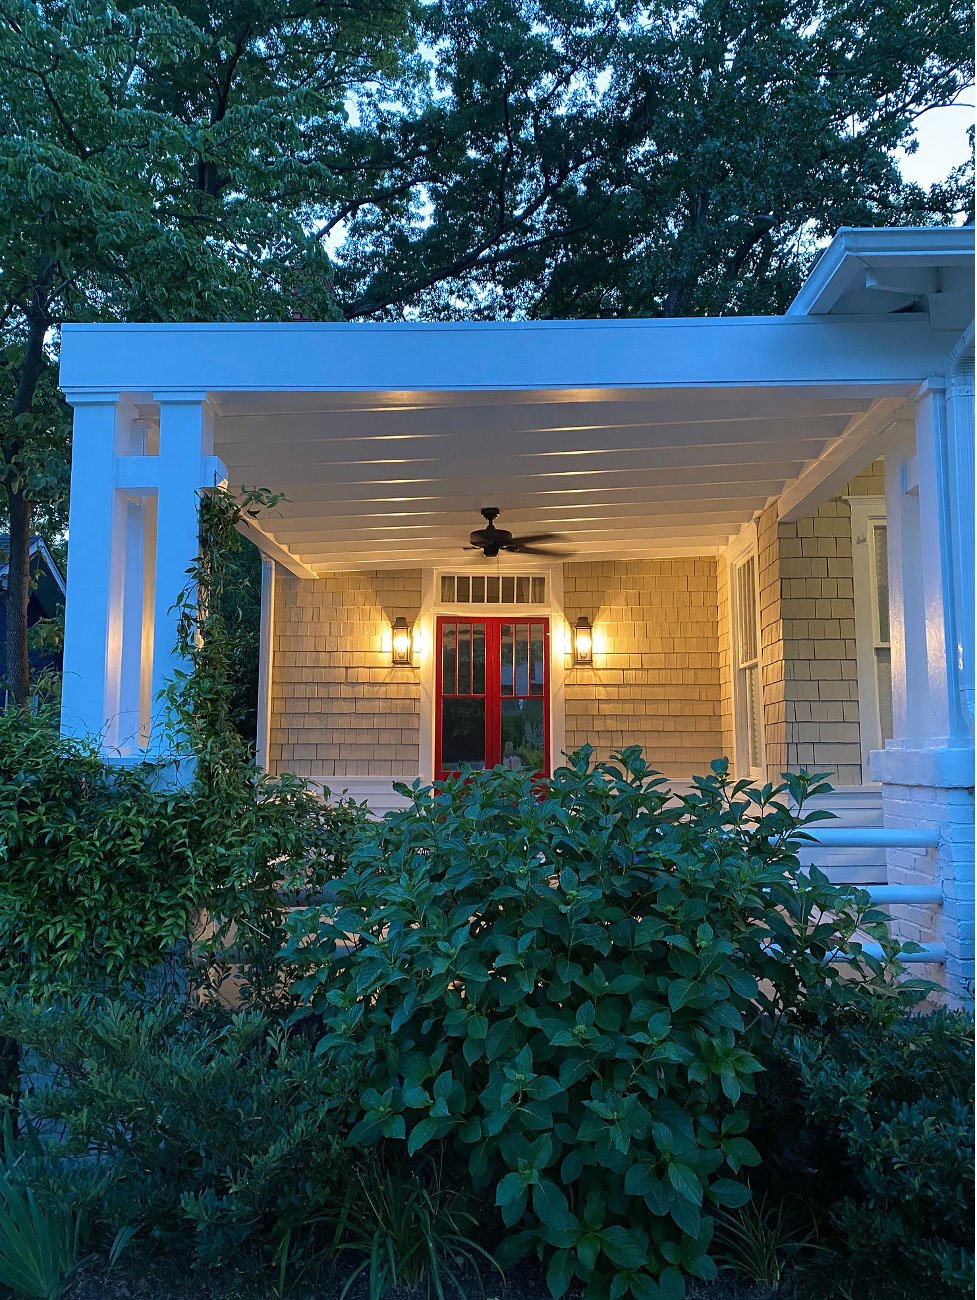 Red Patio Doors of Historic Home